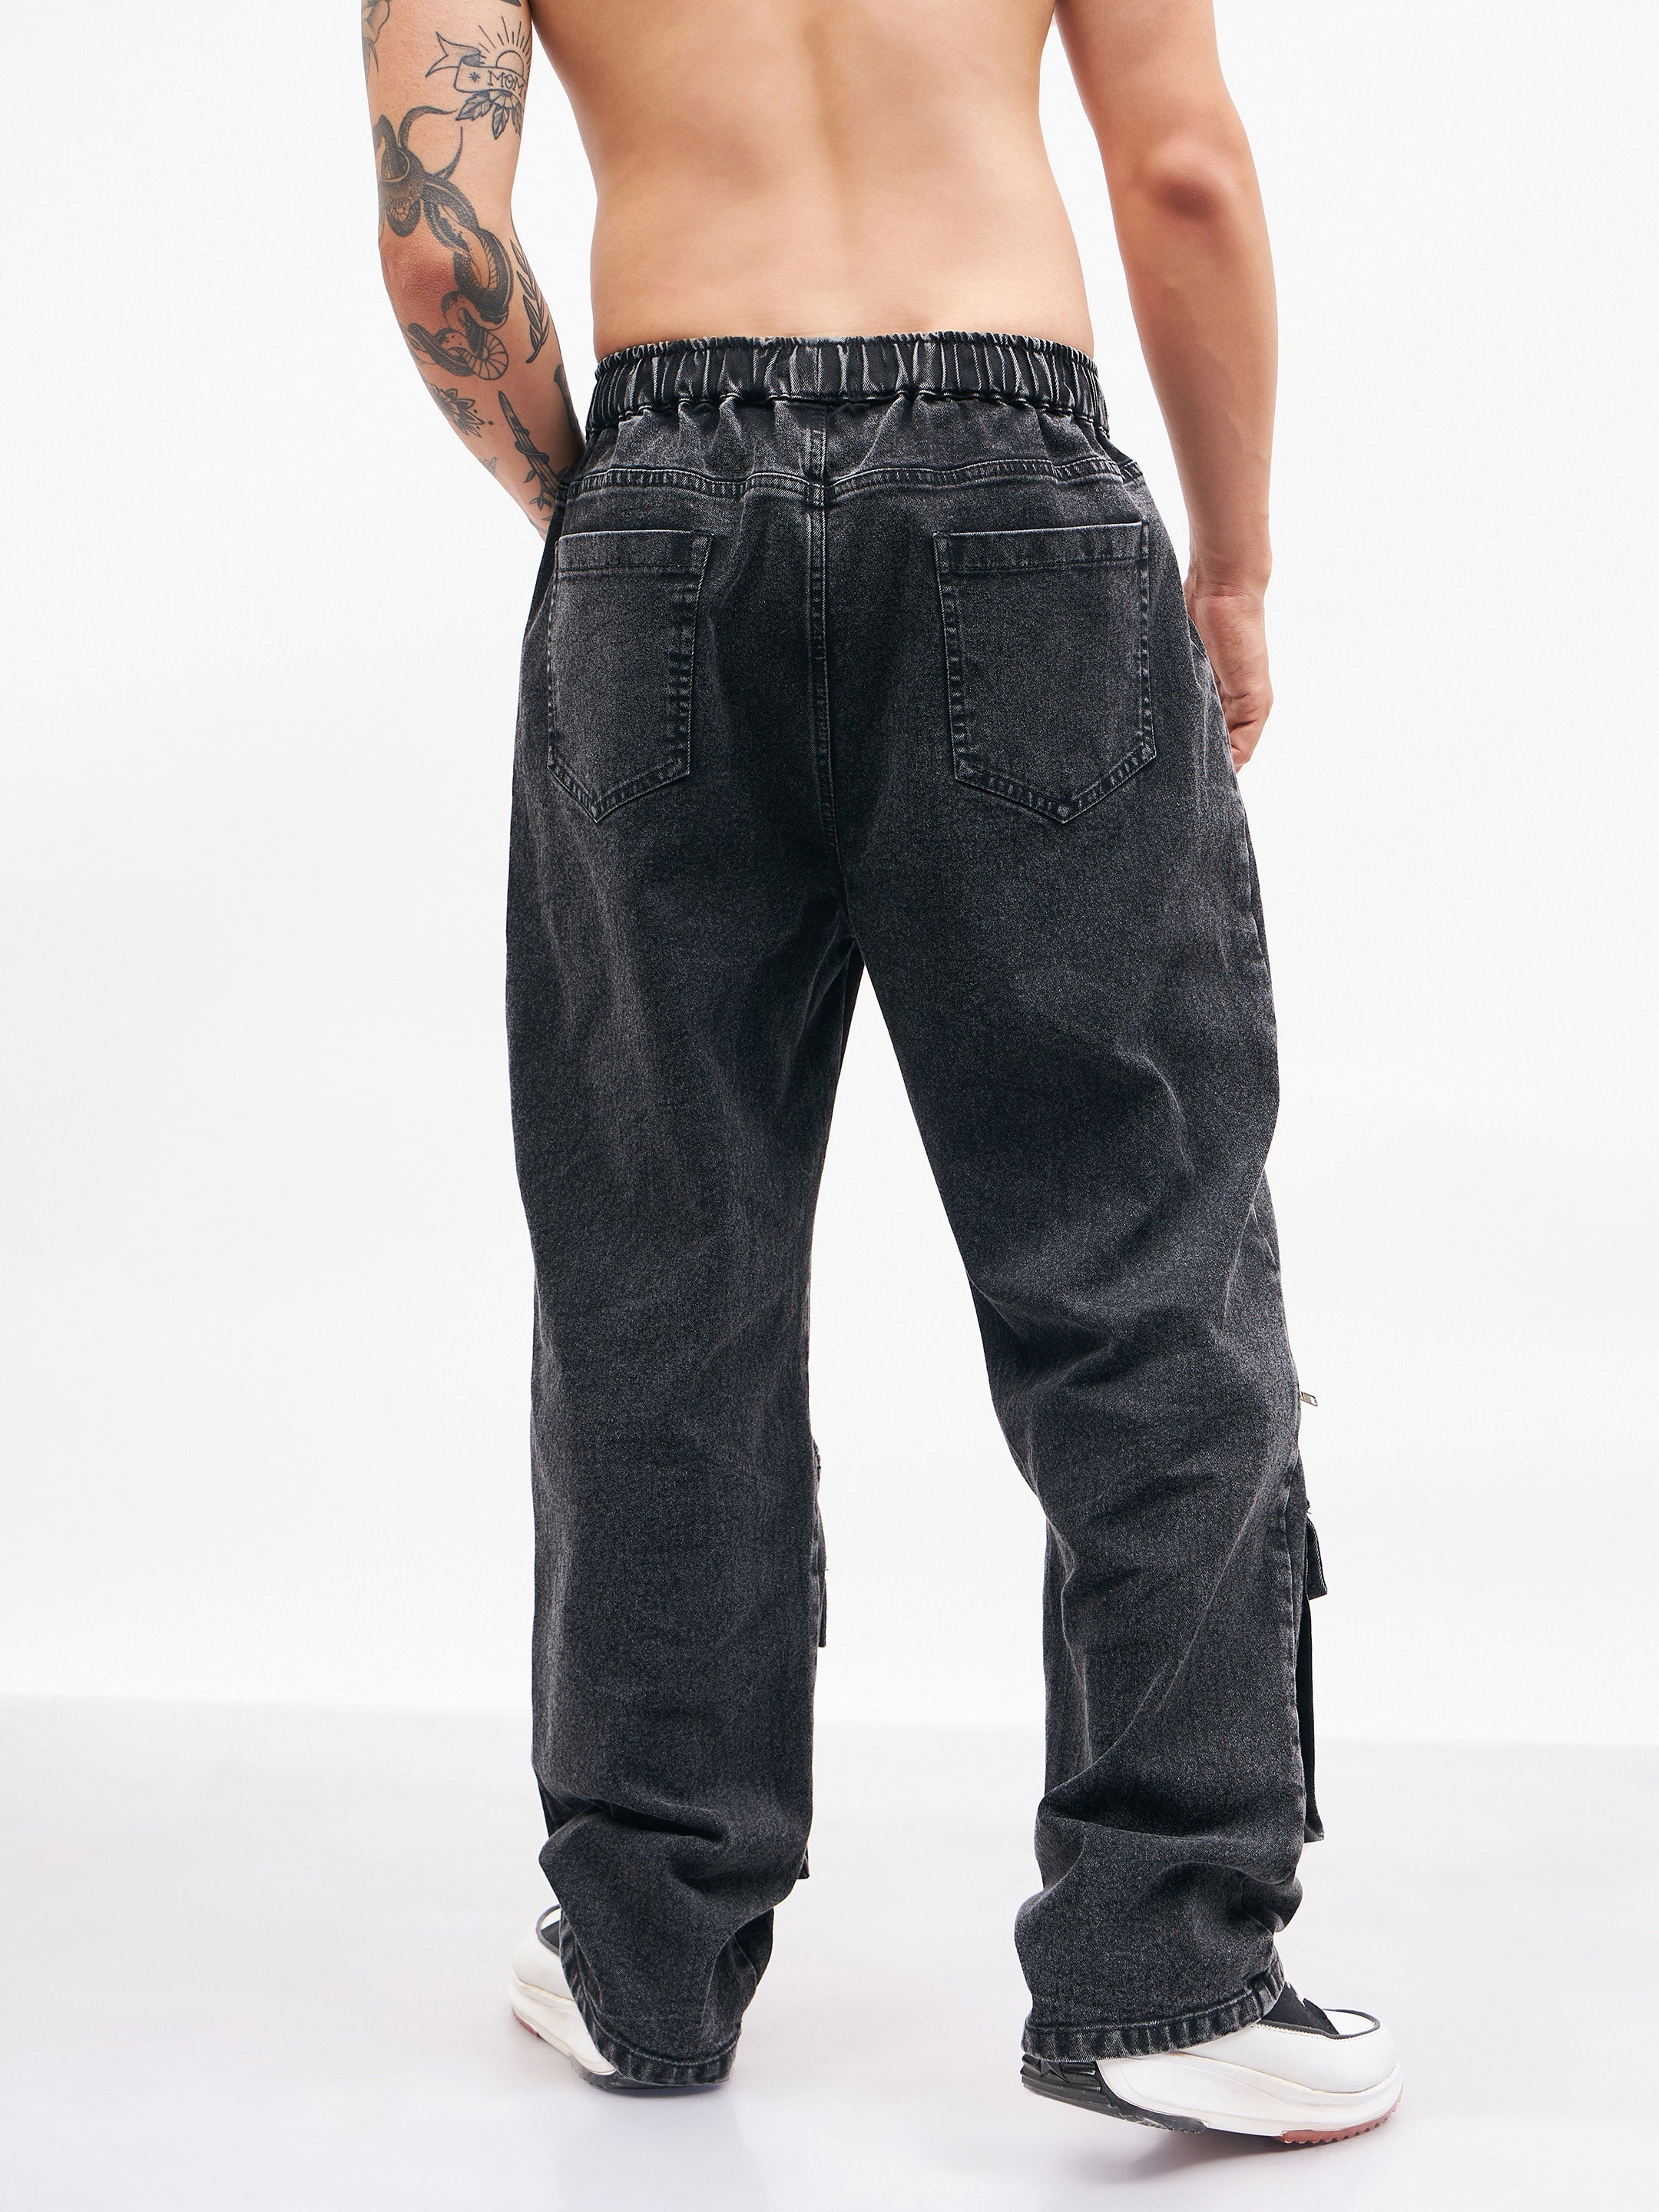 Men's Black Front Zipper Baggy Fit Jeans - MASCLN SASSAFRAS